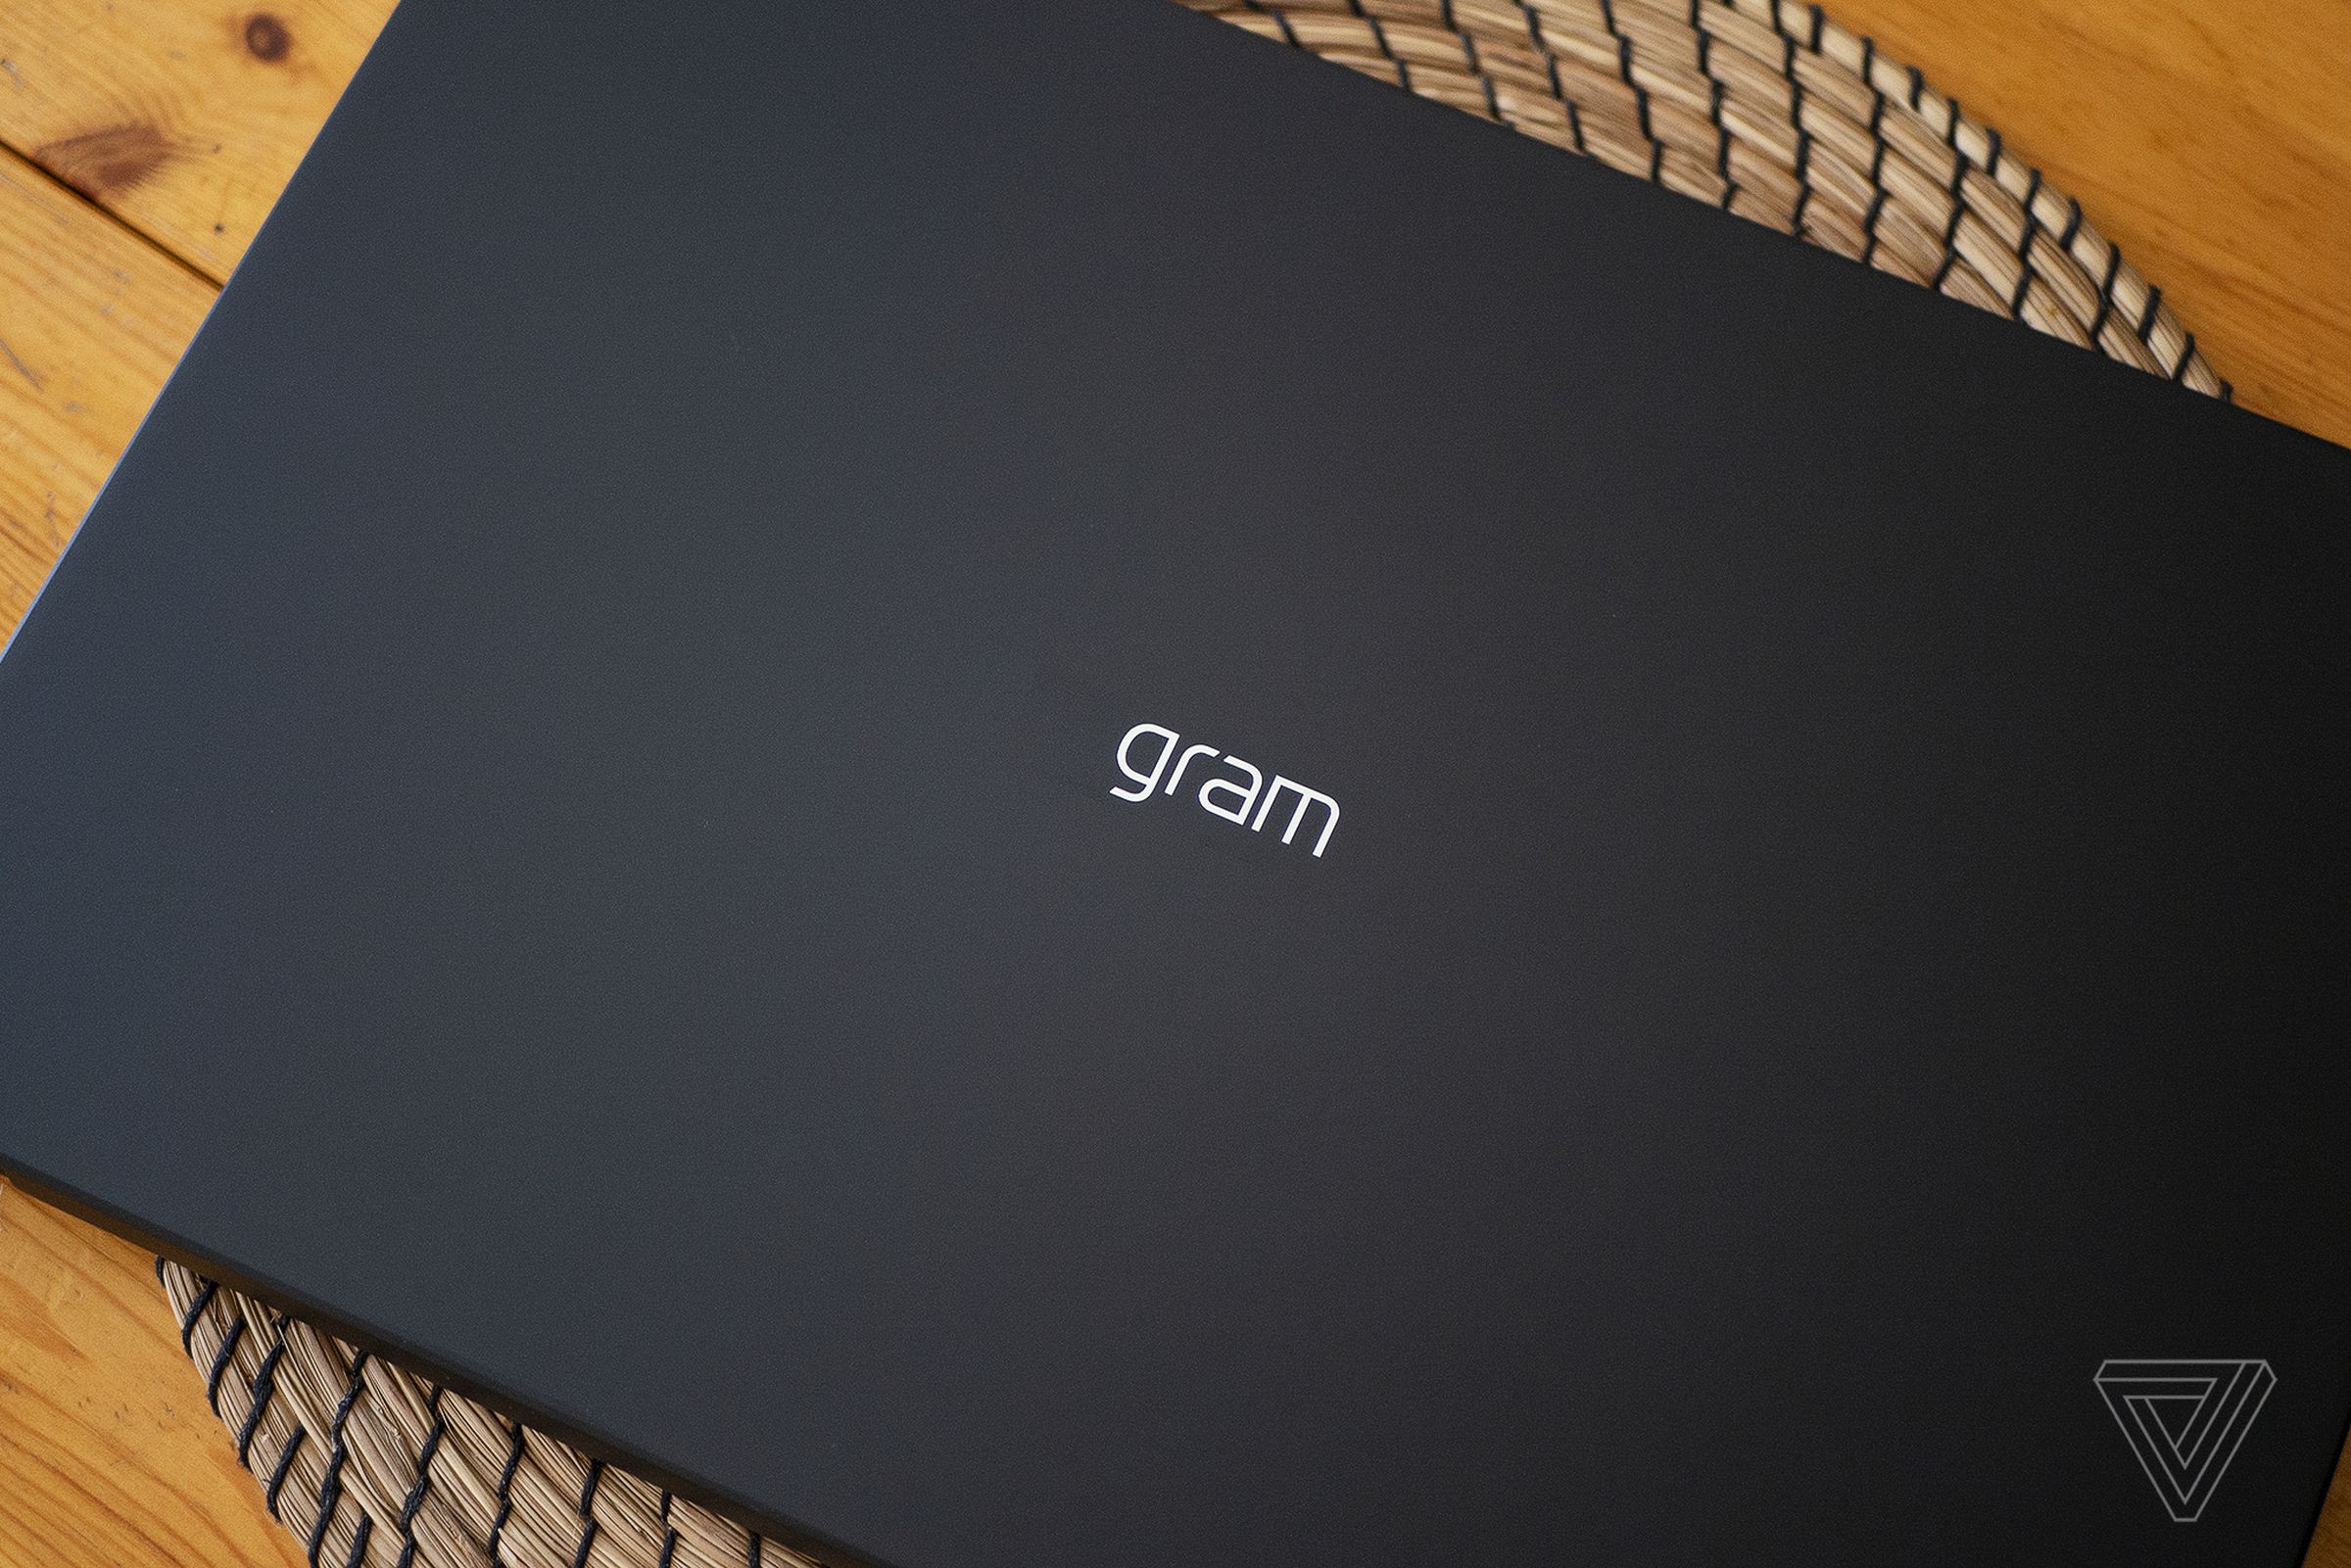 Best Laptop 2021: LG Gram 17